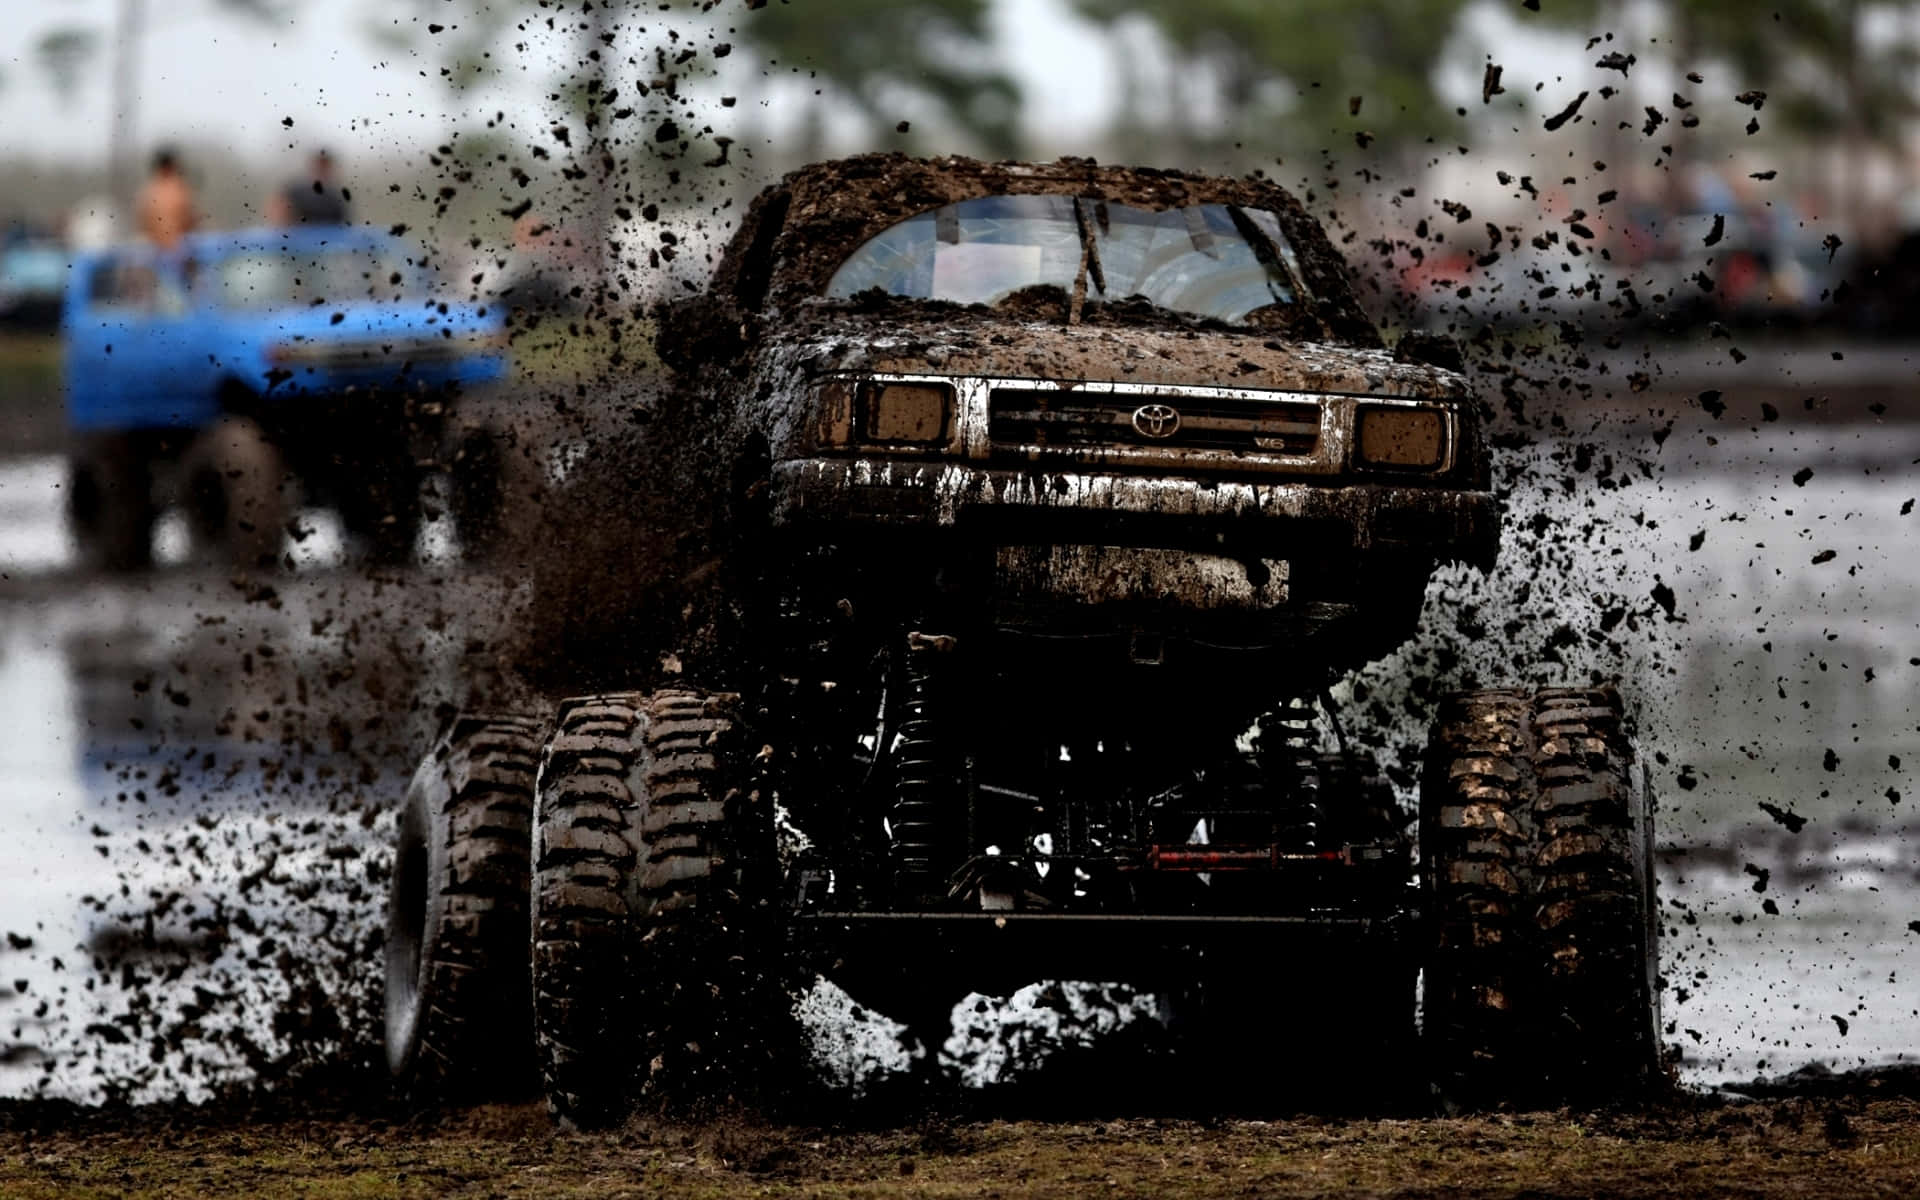 A Truck Driving Through Mud In A Muddy Field